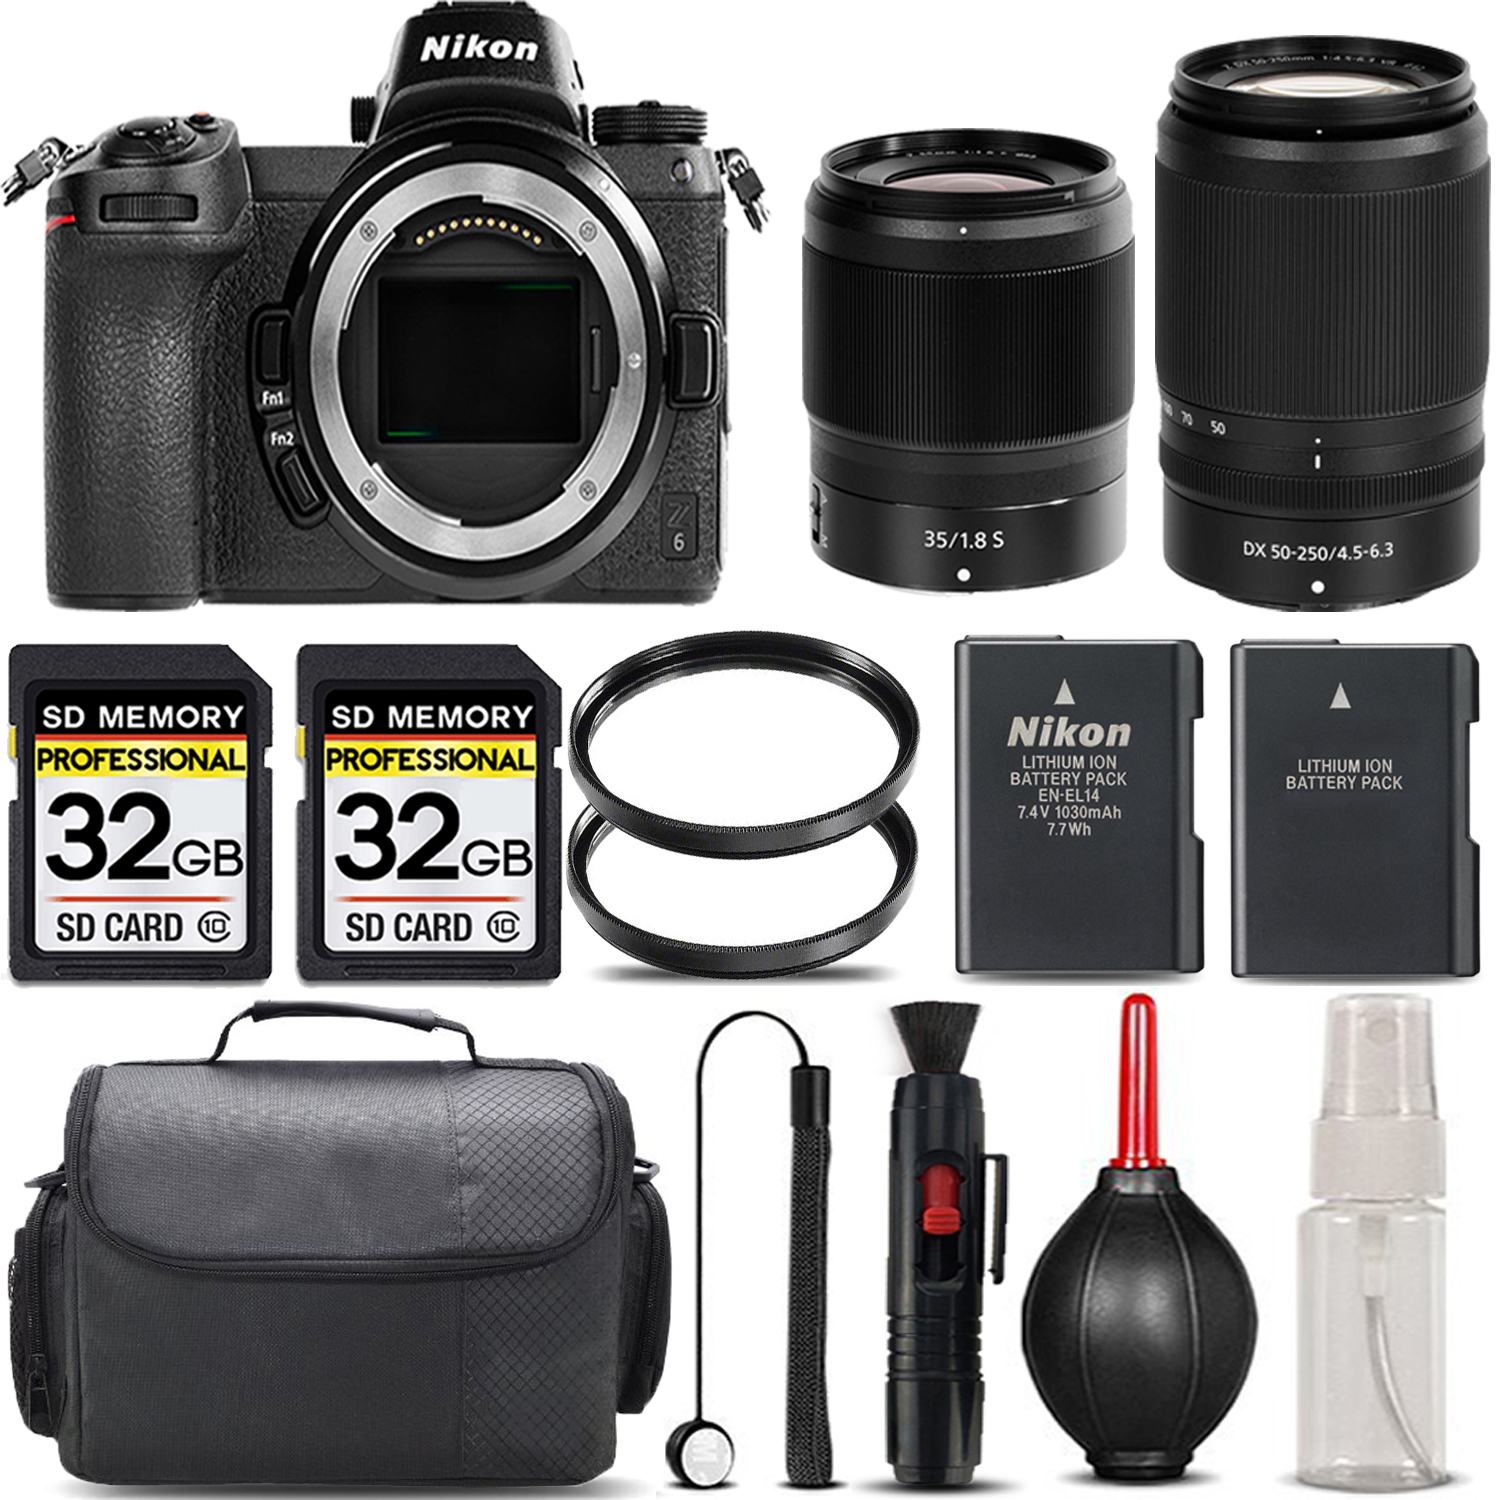 Z6 + 50-250mm f/4.5-6.3 Lens + 35mm f/1.8 S Lens + Handbag - SAVE BIG KIT *FREE SHIPPING*